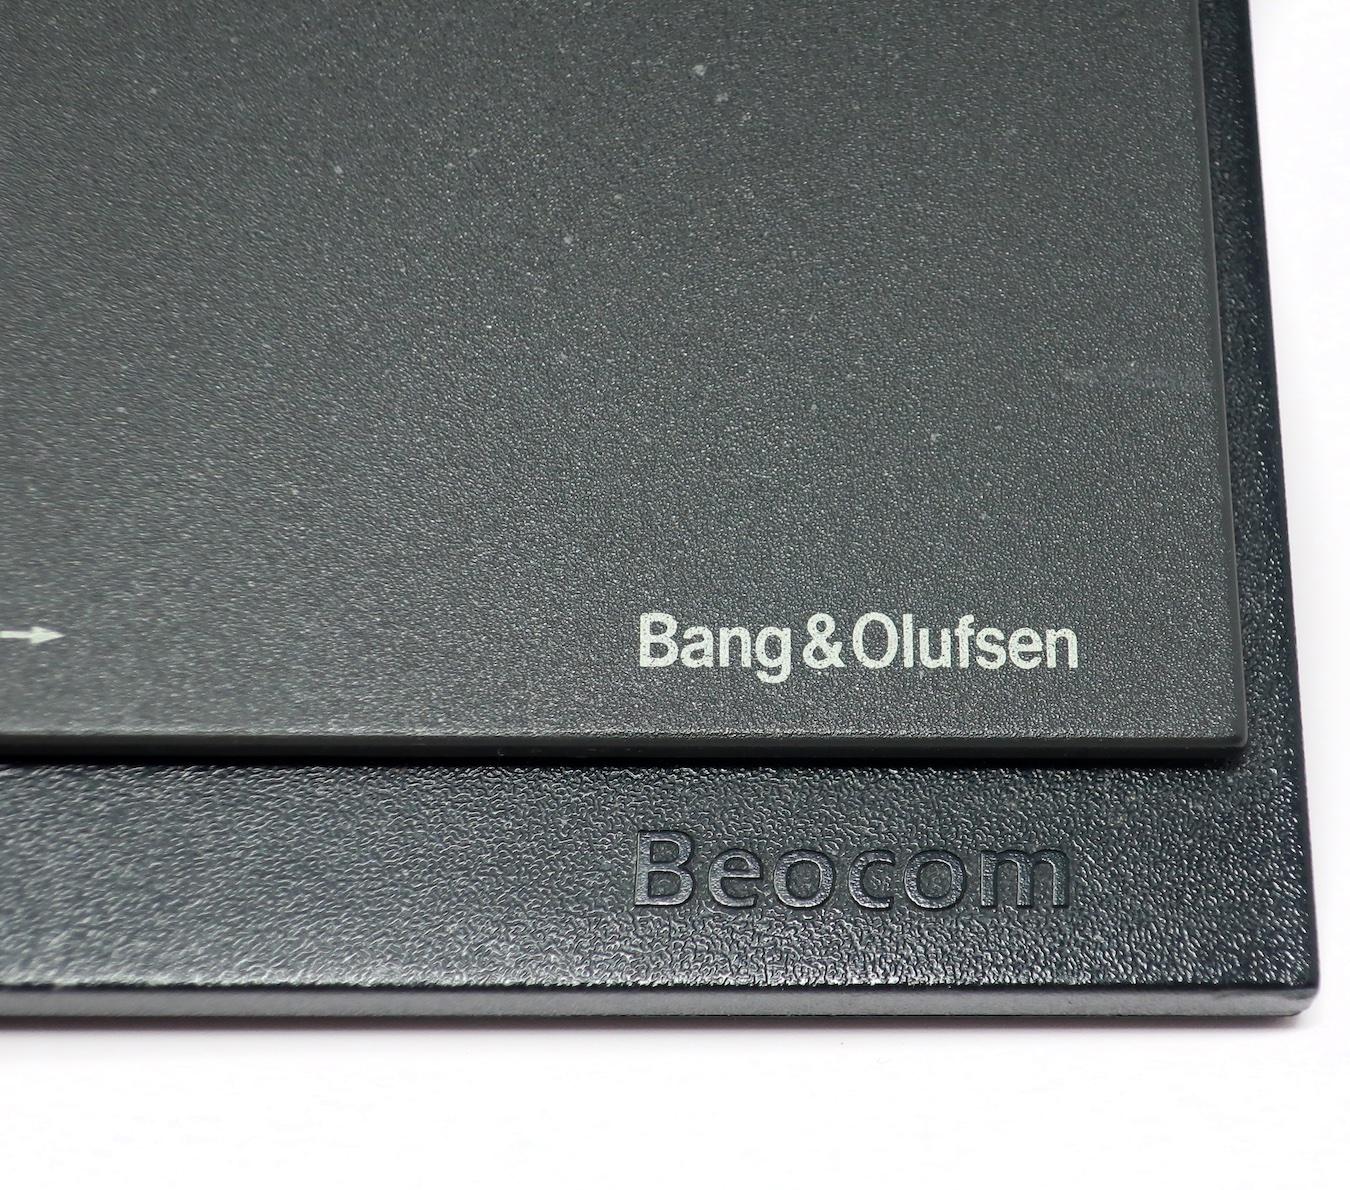 Post-Modern 1980s, Black Bang & Olufsen Beocom 2000 Phone